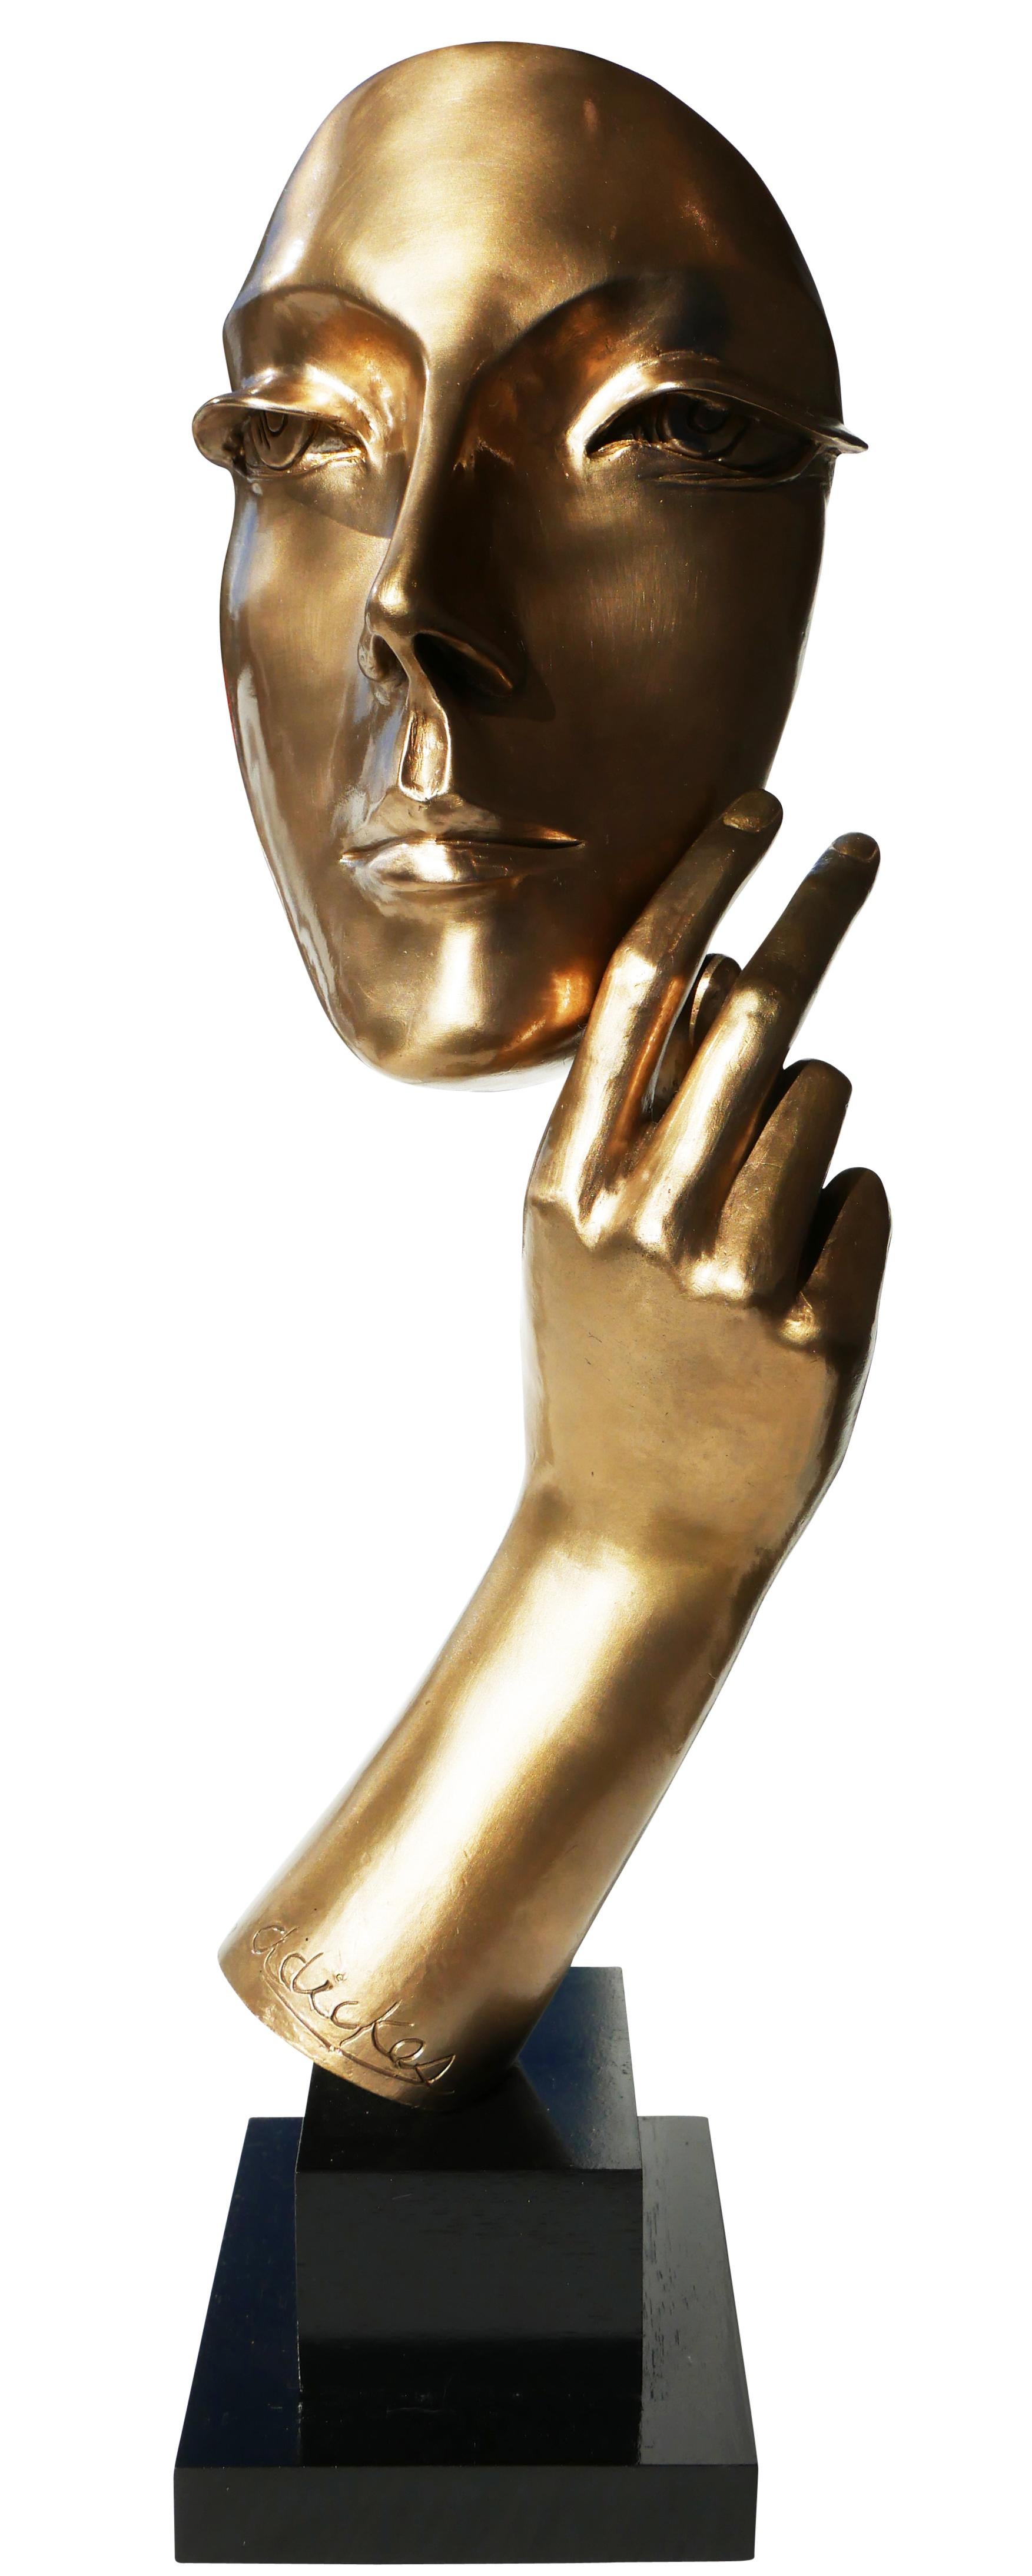 Abstract Sculpture David Adickes - Face féminine moderniste abstraite avec bras sculpté en bronze